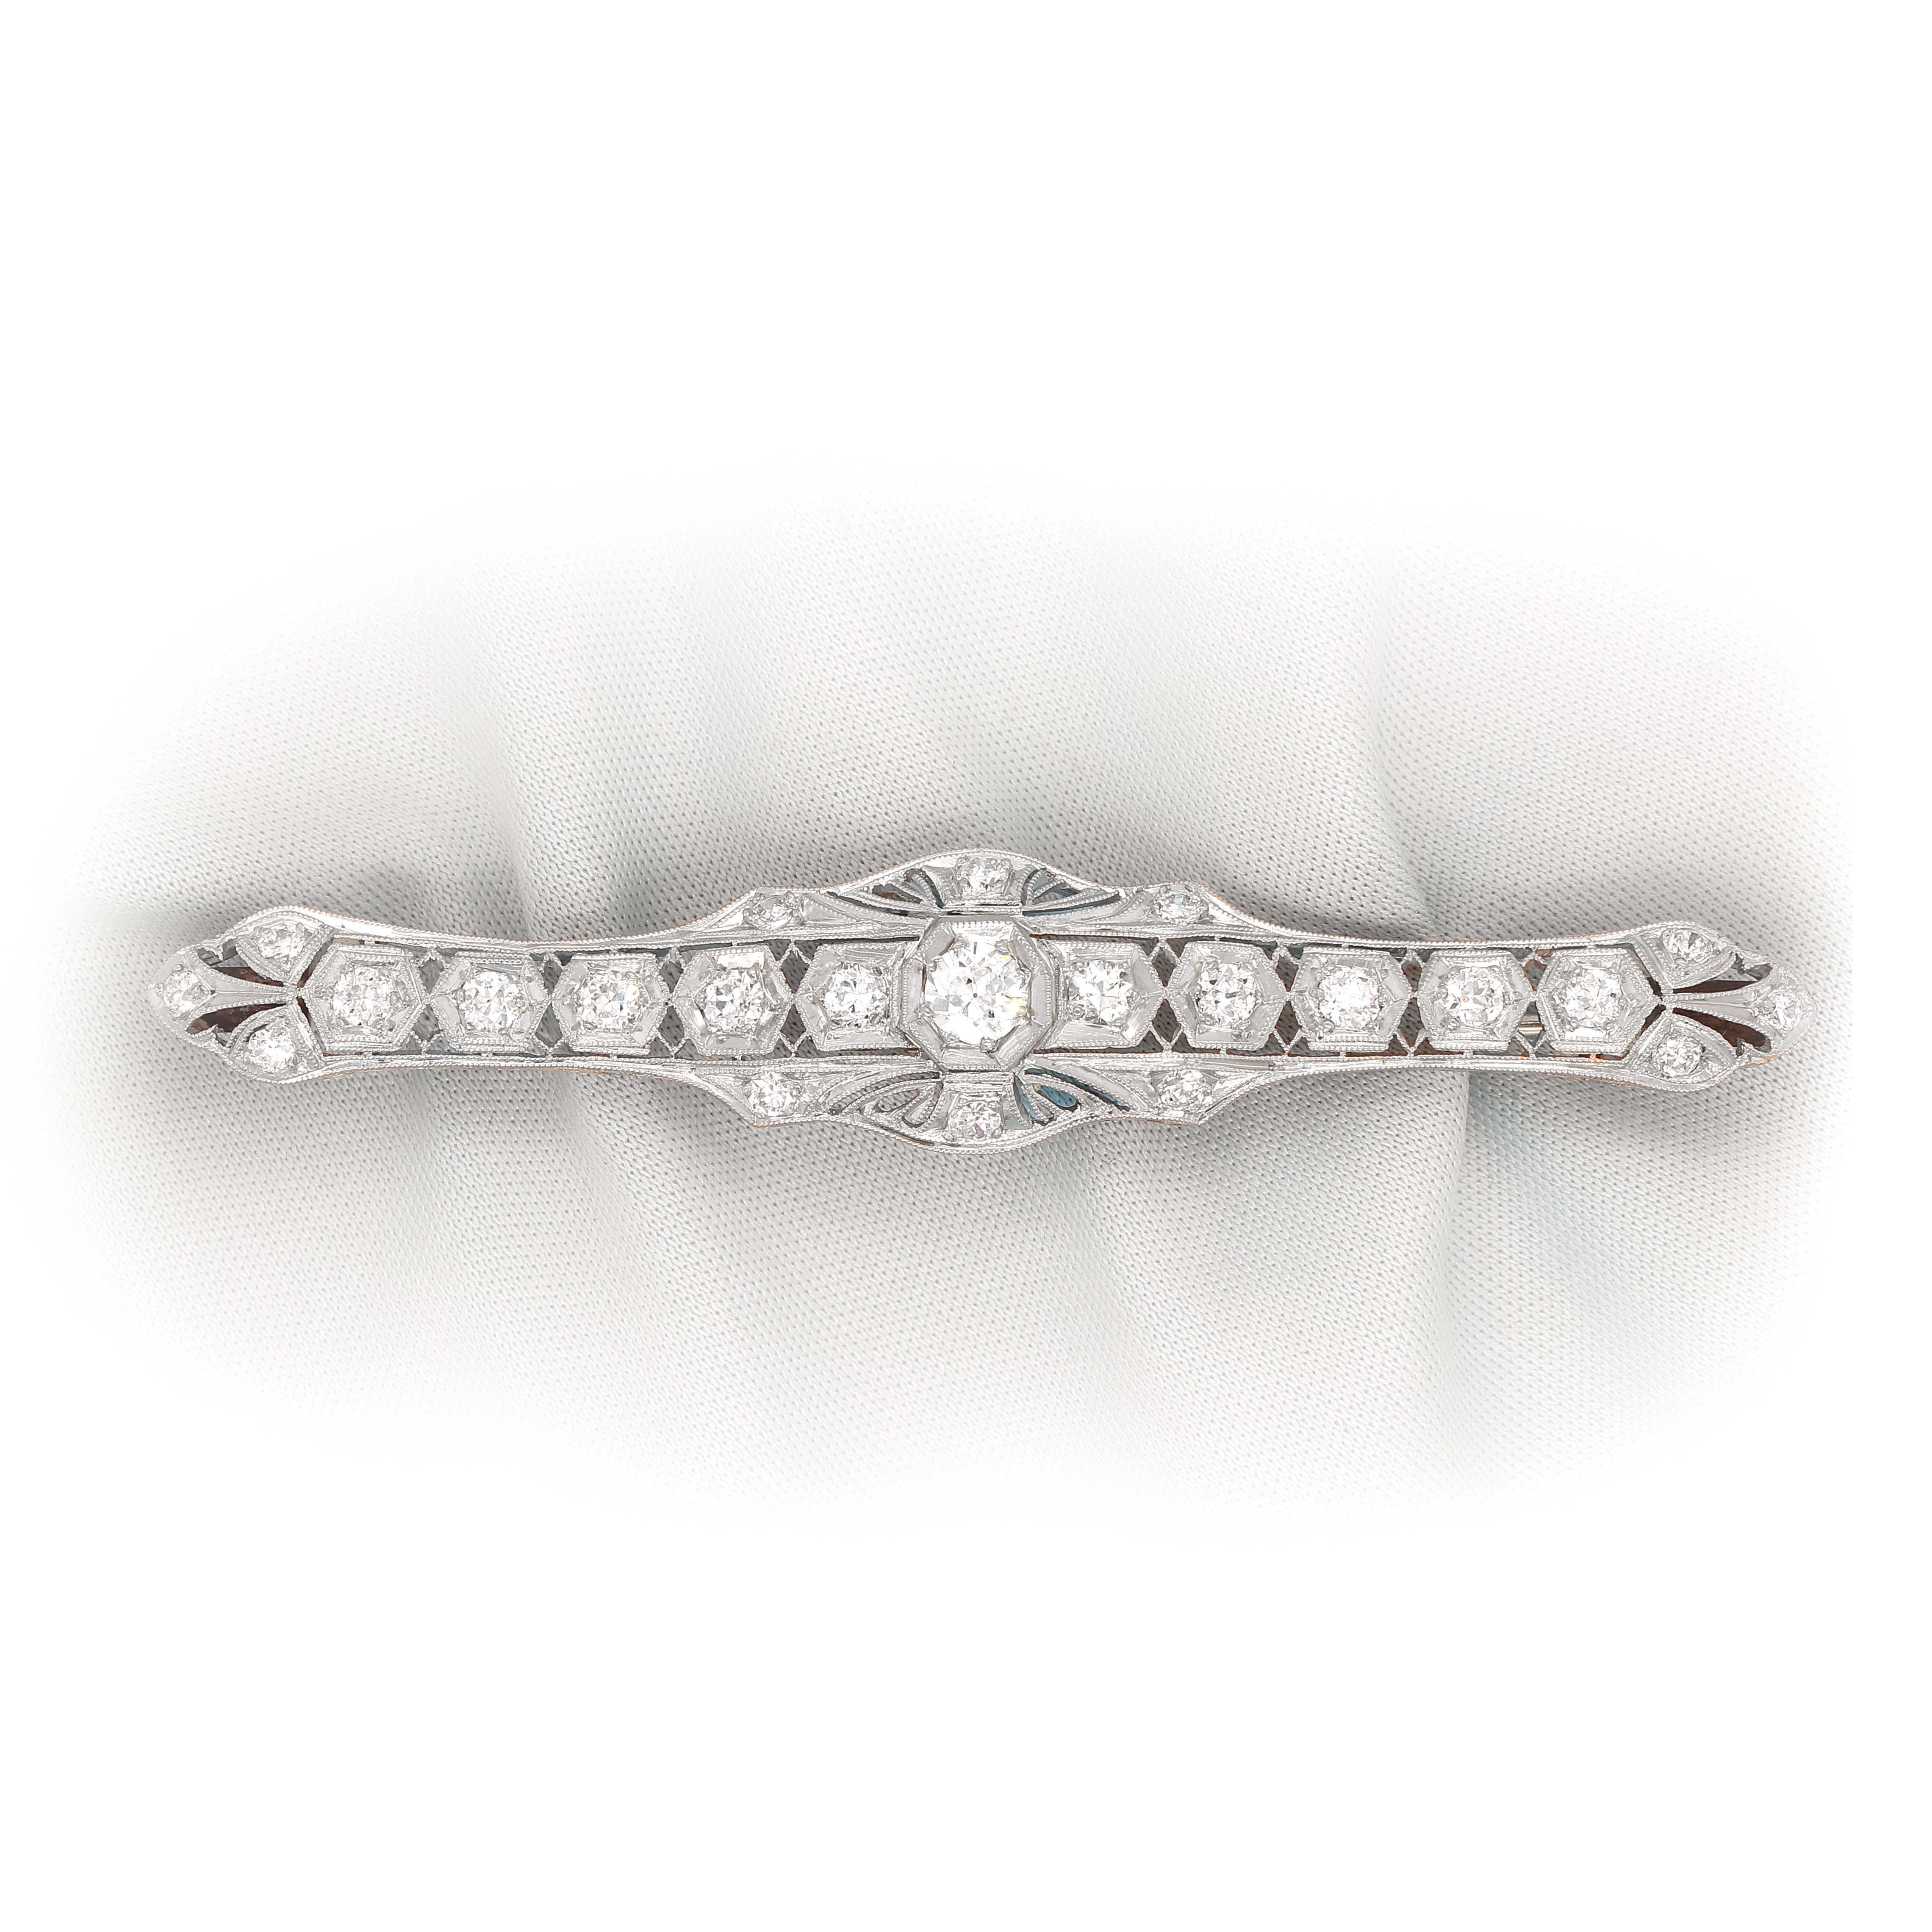 Women's European Art Deco 3.10 Carat Diamond Brooch For Sale